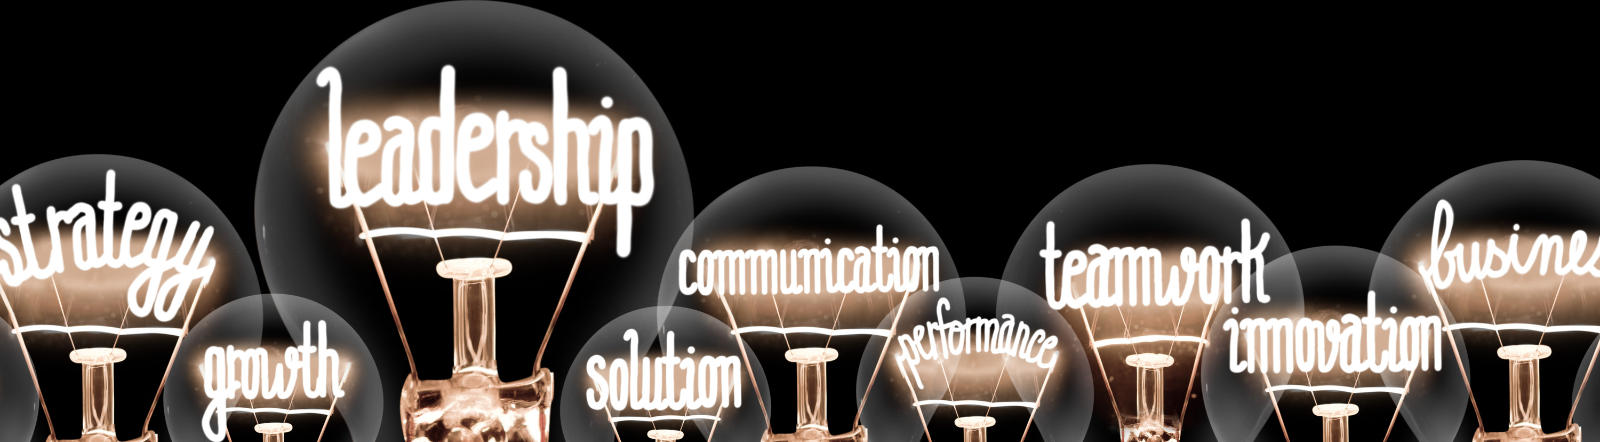 Lightbulbs on black background with leadership keywords as the lit filament.